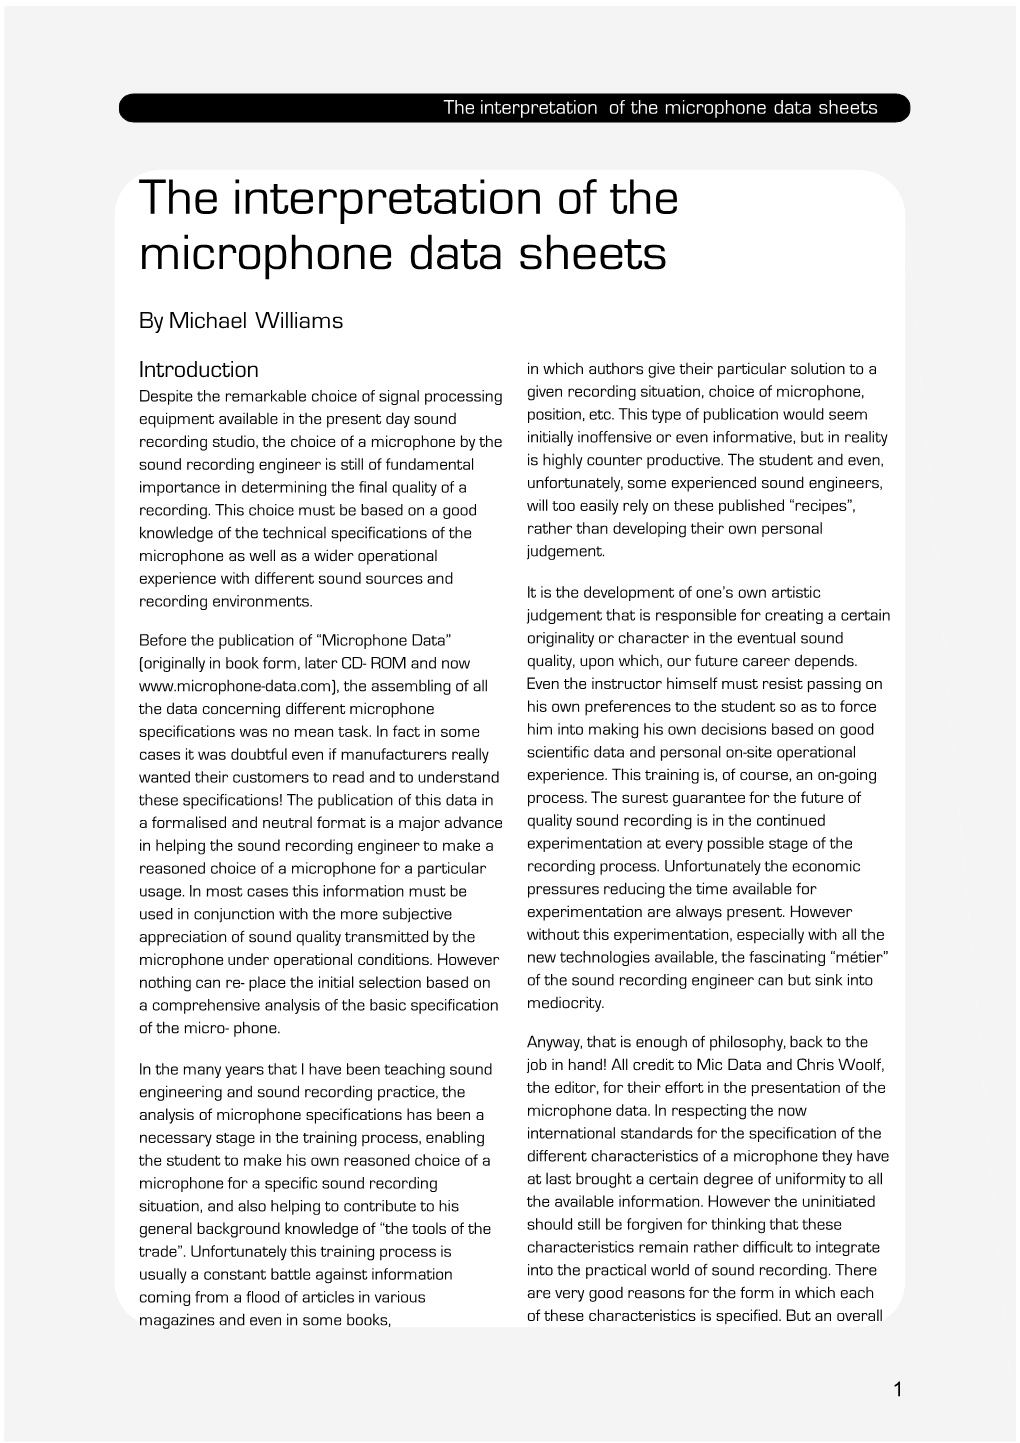 The Interpretation of the Microphone Data Sheets (Pdf)